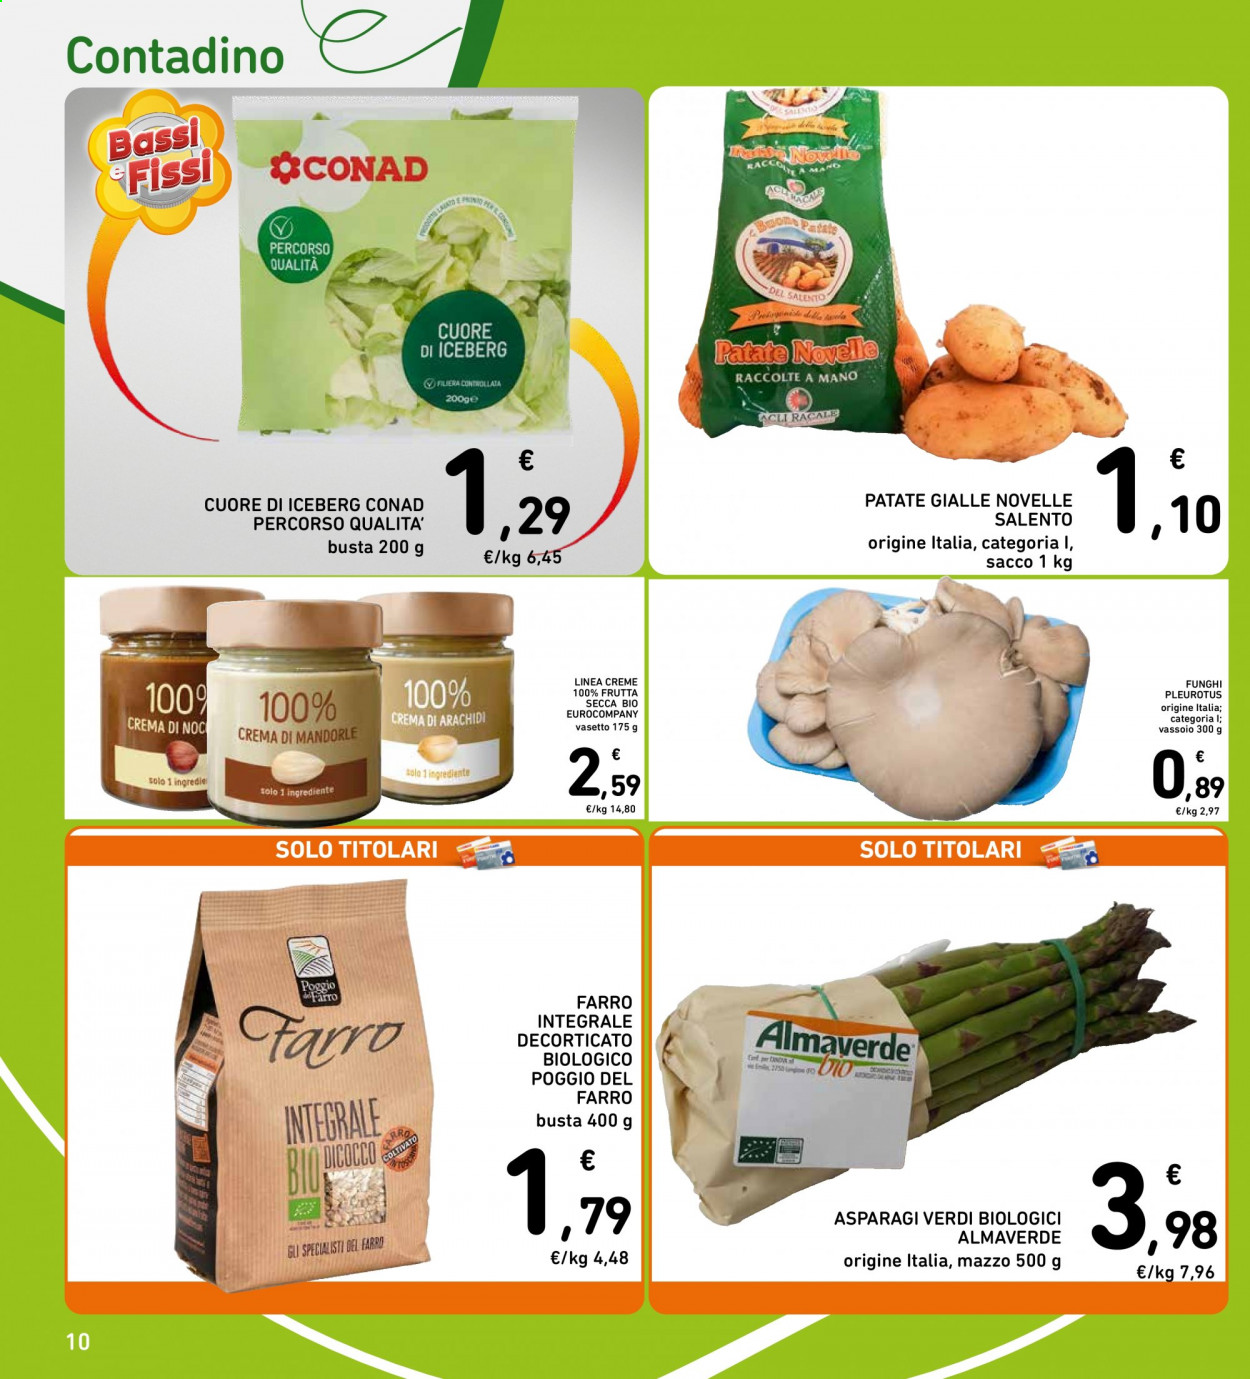 thumbnail - Volantino Conad - 15/4/2021 - 25/4/2021 - Prodotti in offerta - funghi pleurotus, patate, patate novelle, asparagi, patate gialle. Pagina 10.